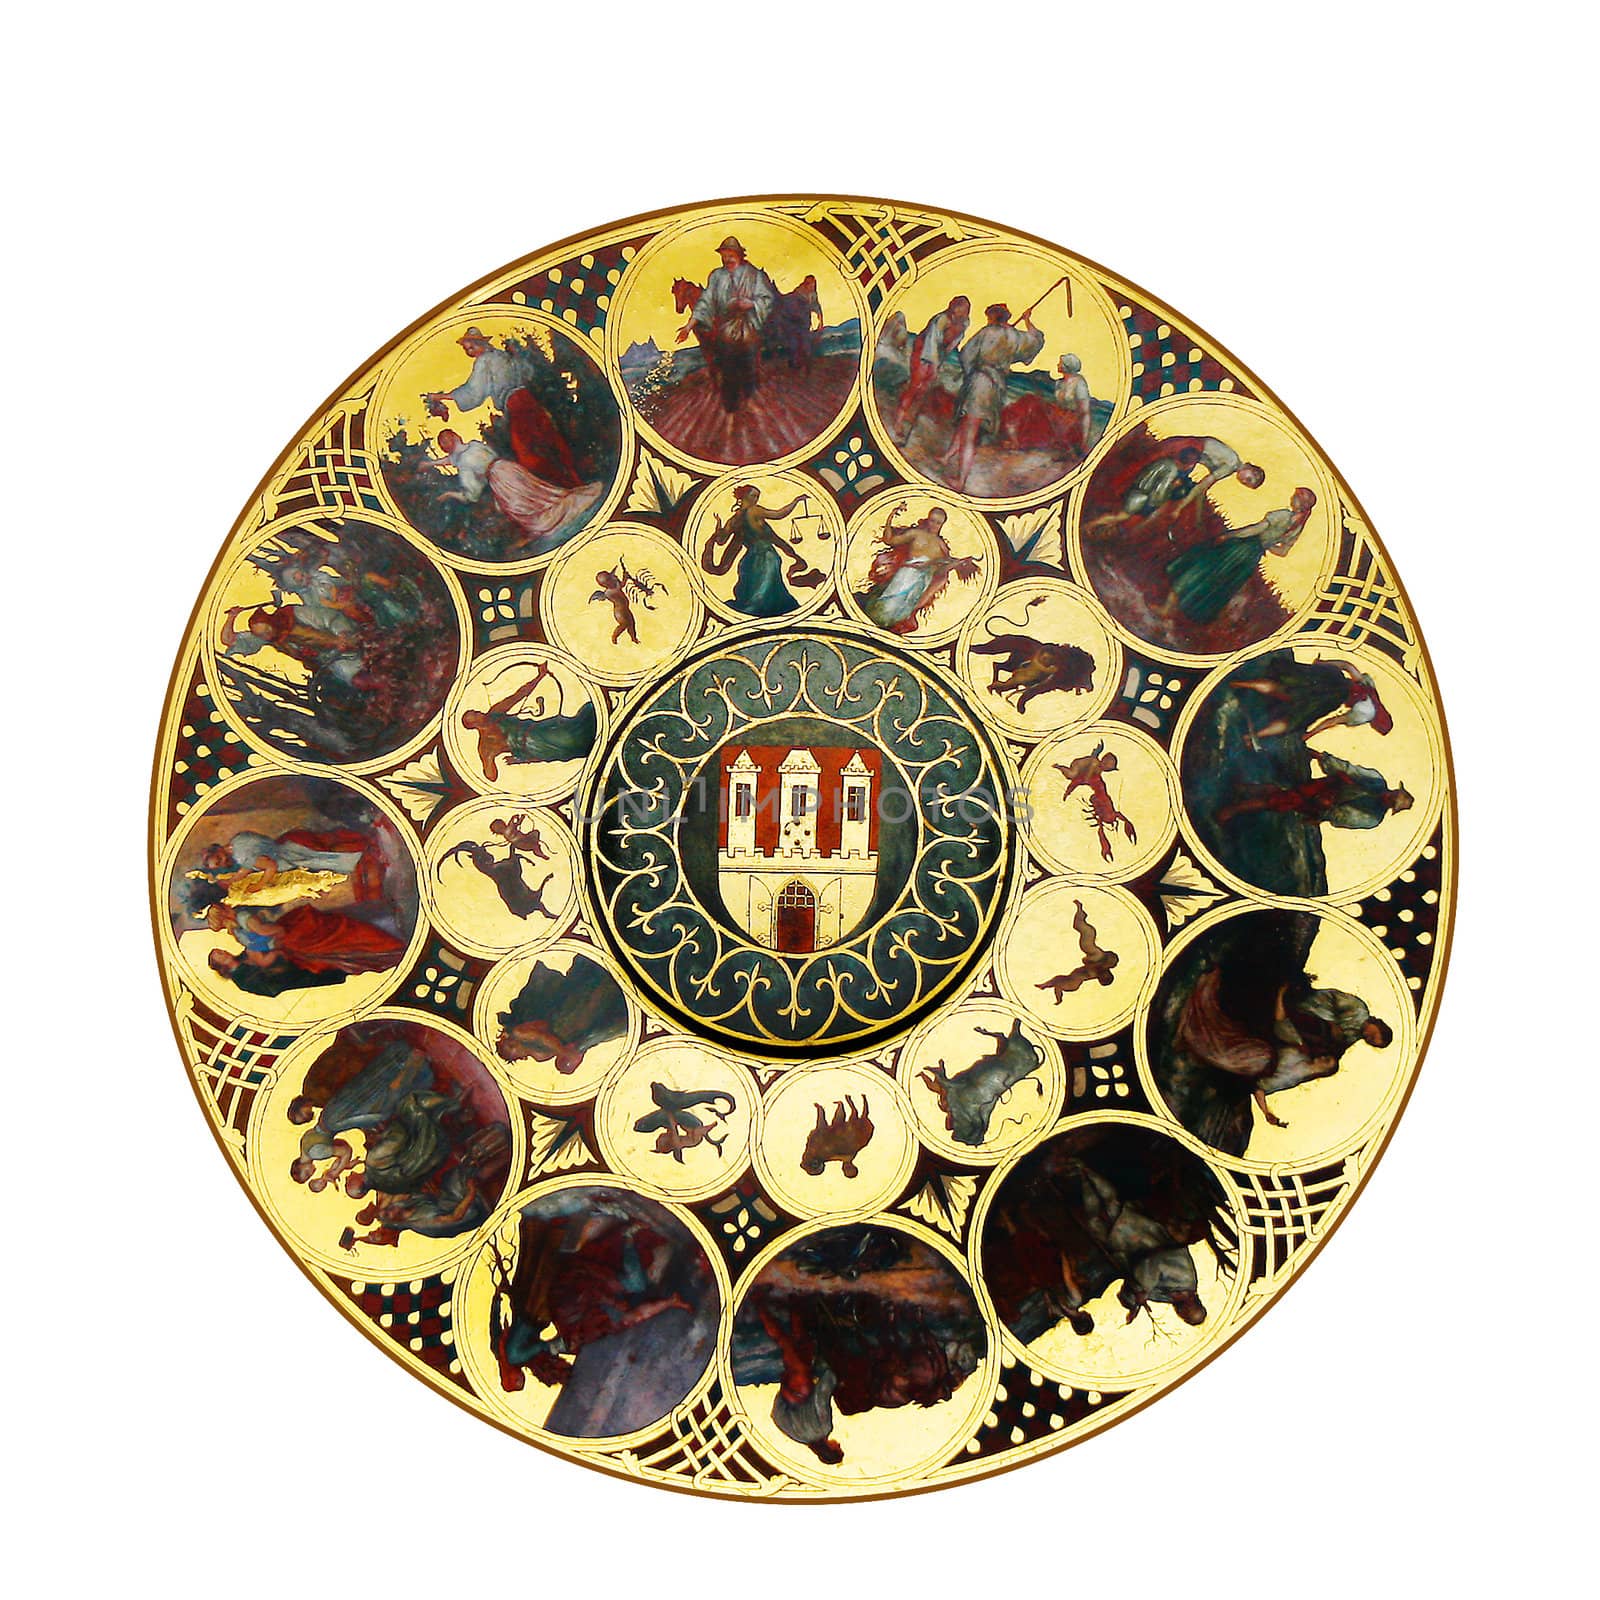 Zodiac from Astronomical clock, Prague by cristiaciobanu